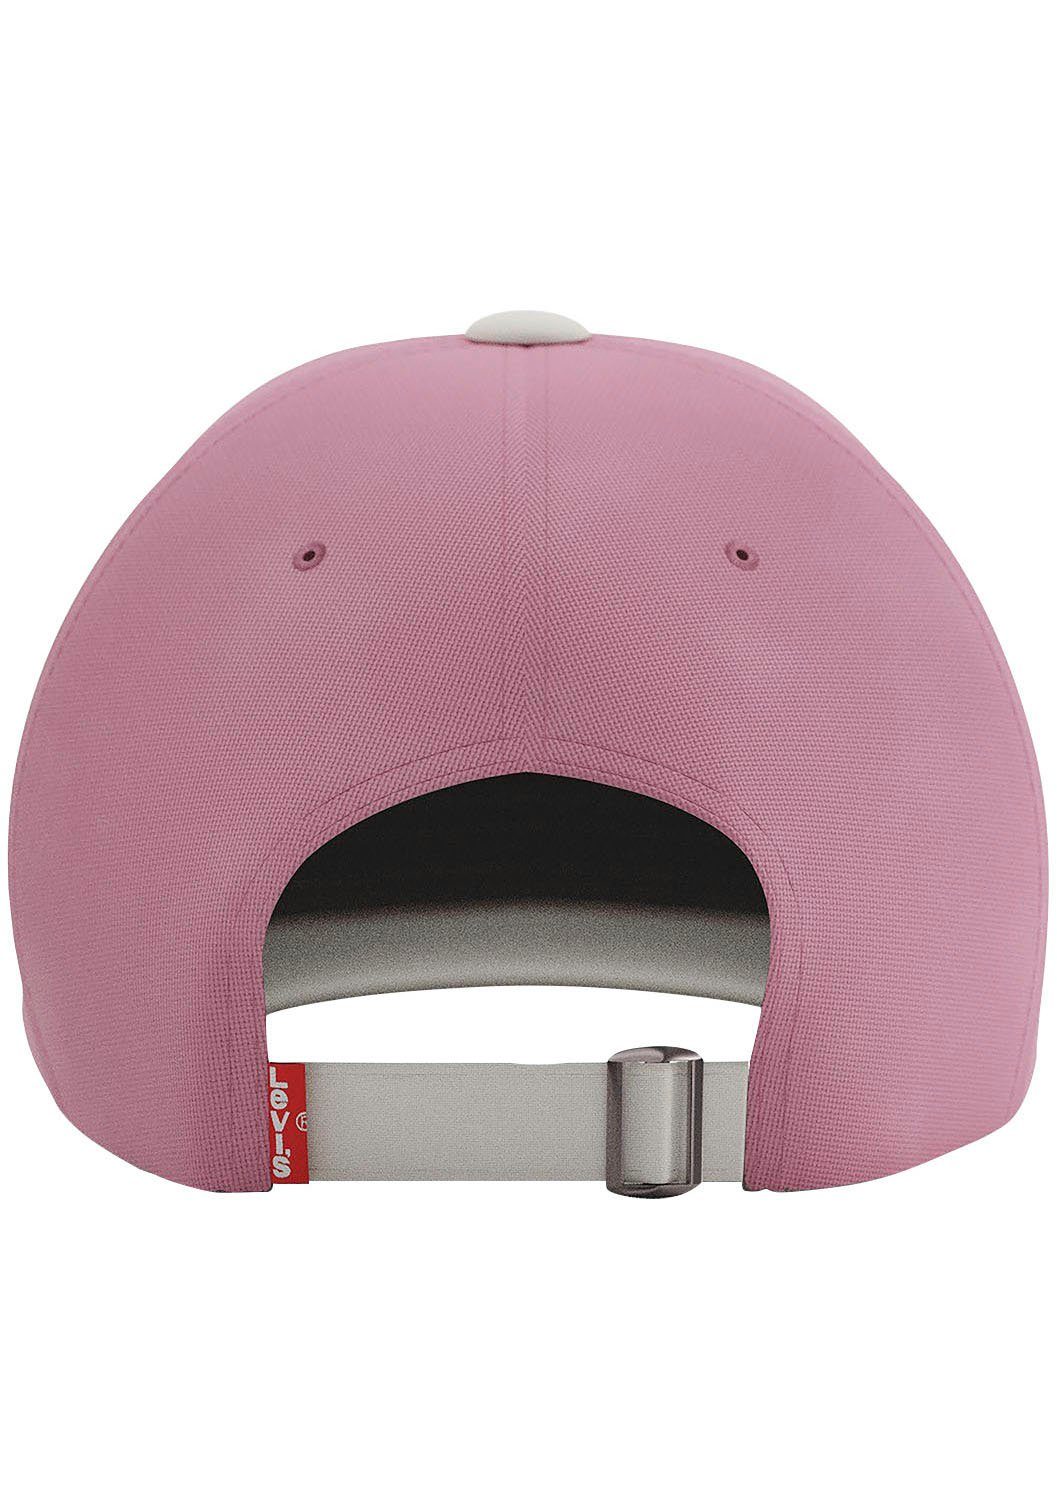 Levi's Baseballcap WOMENS HEADLINE LOGO CAP